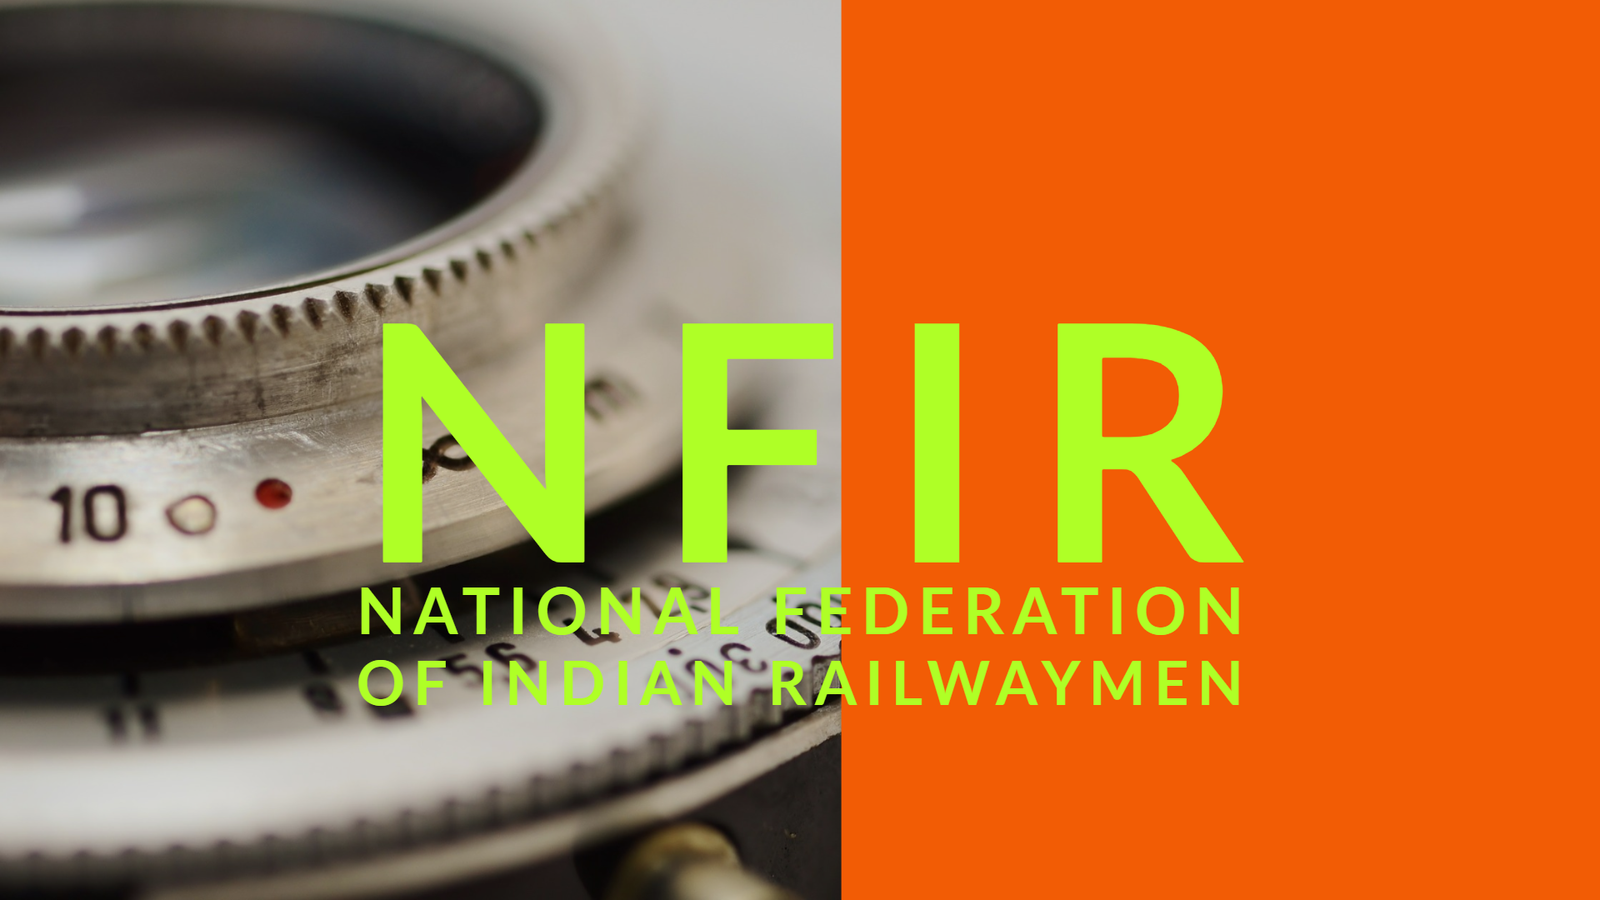 National Federation of Indian Railwaymen